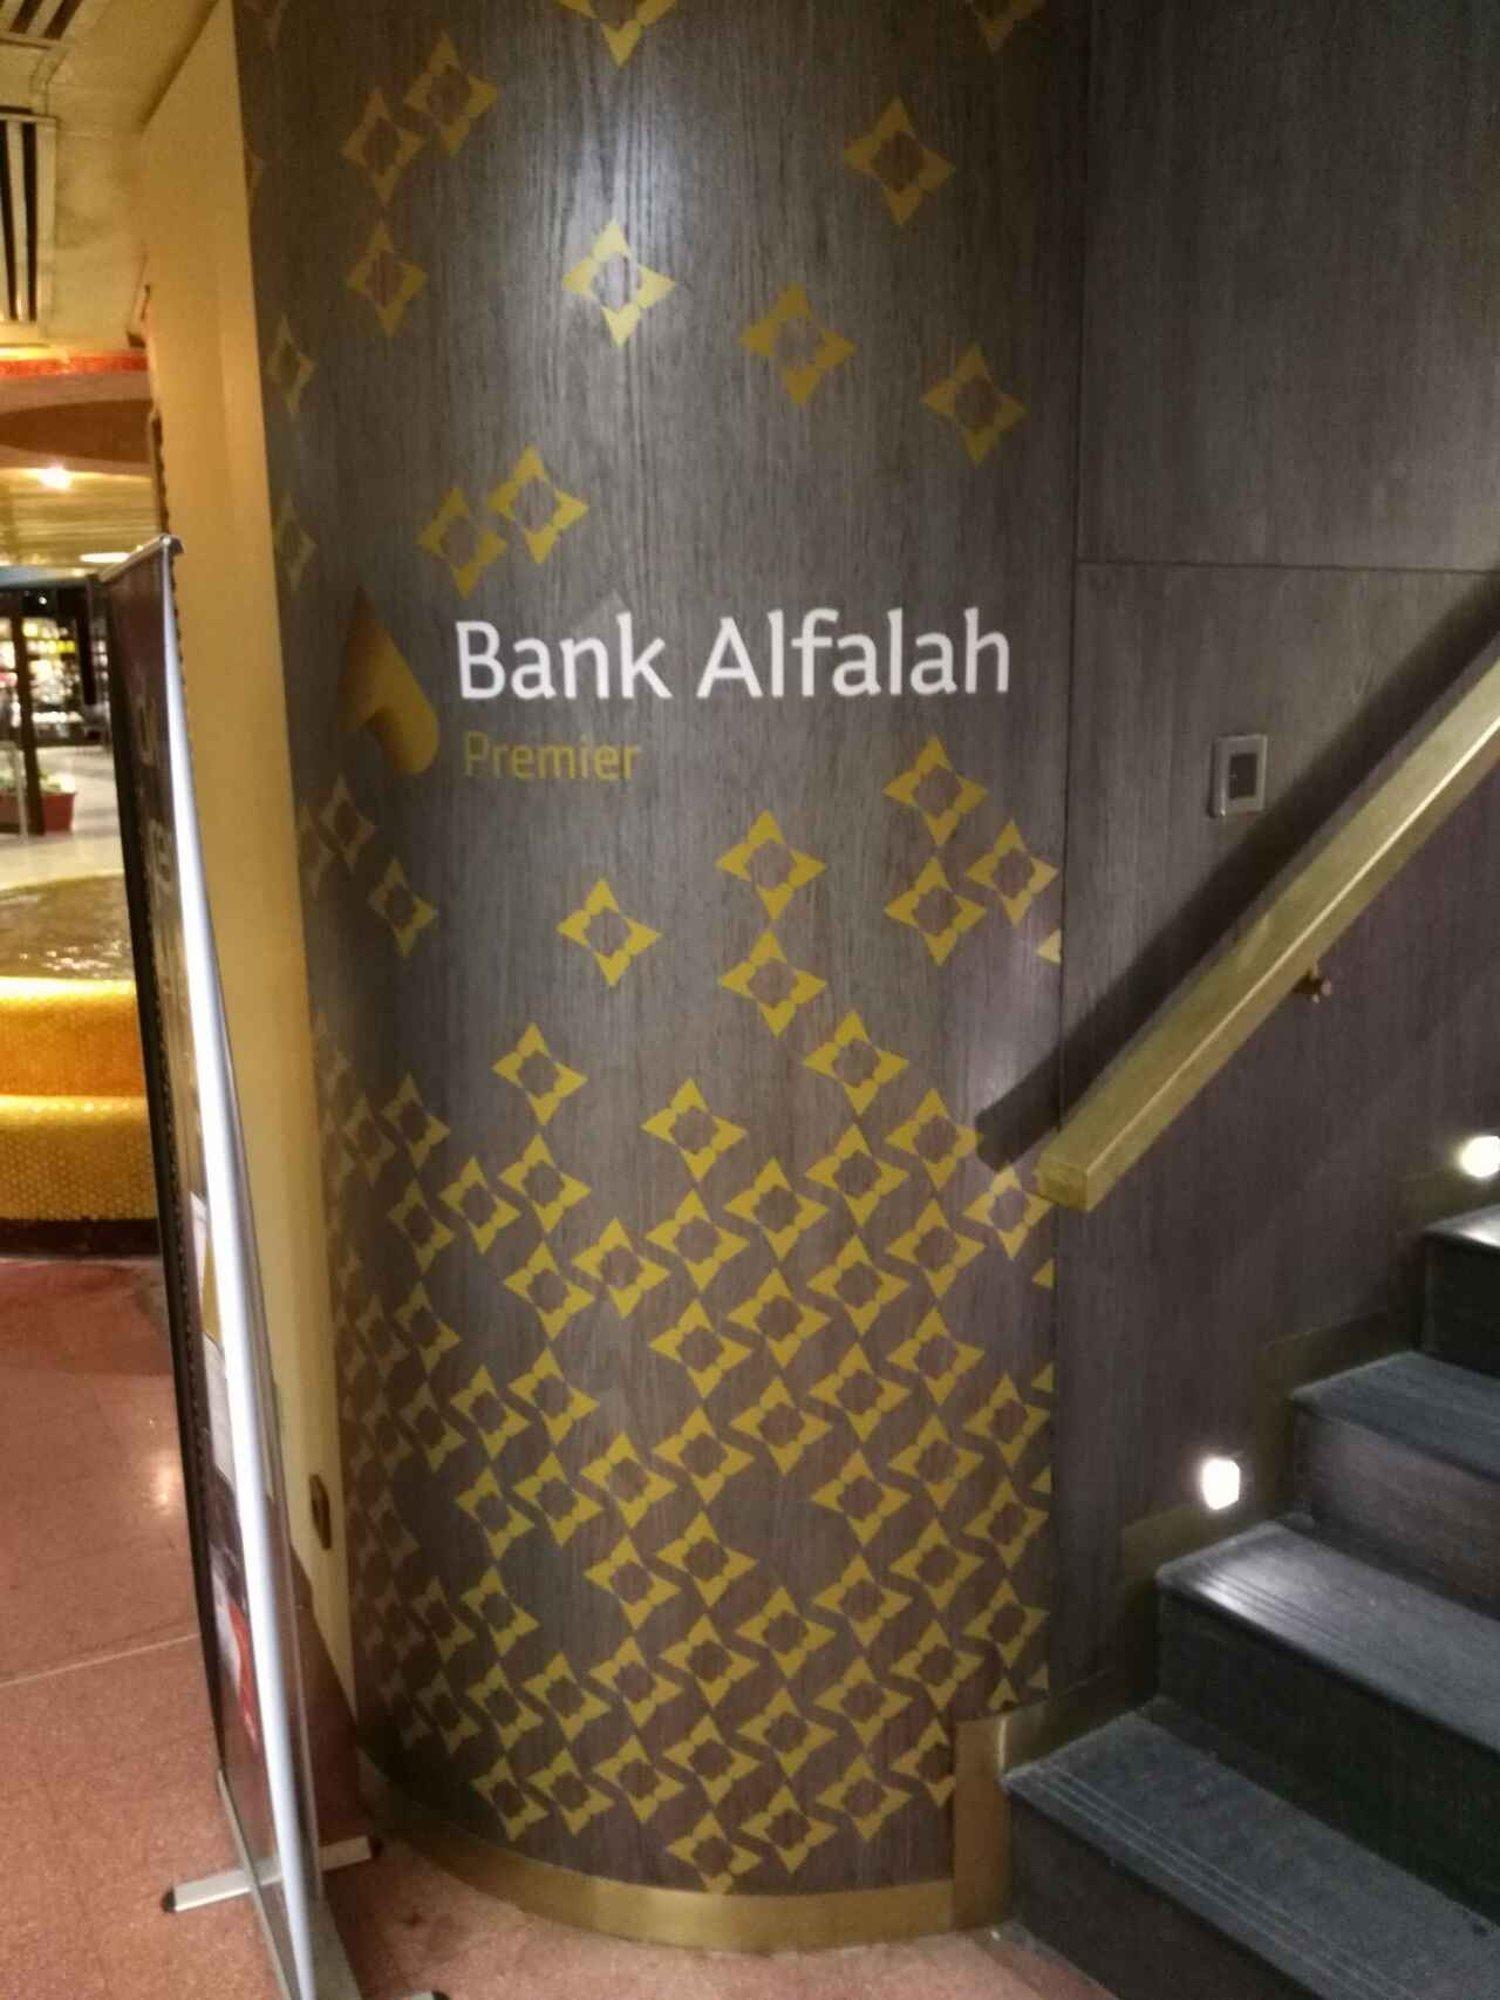 Bank Alfalah Premier Lounge (International) image 3 of 9